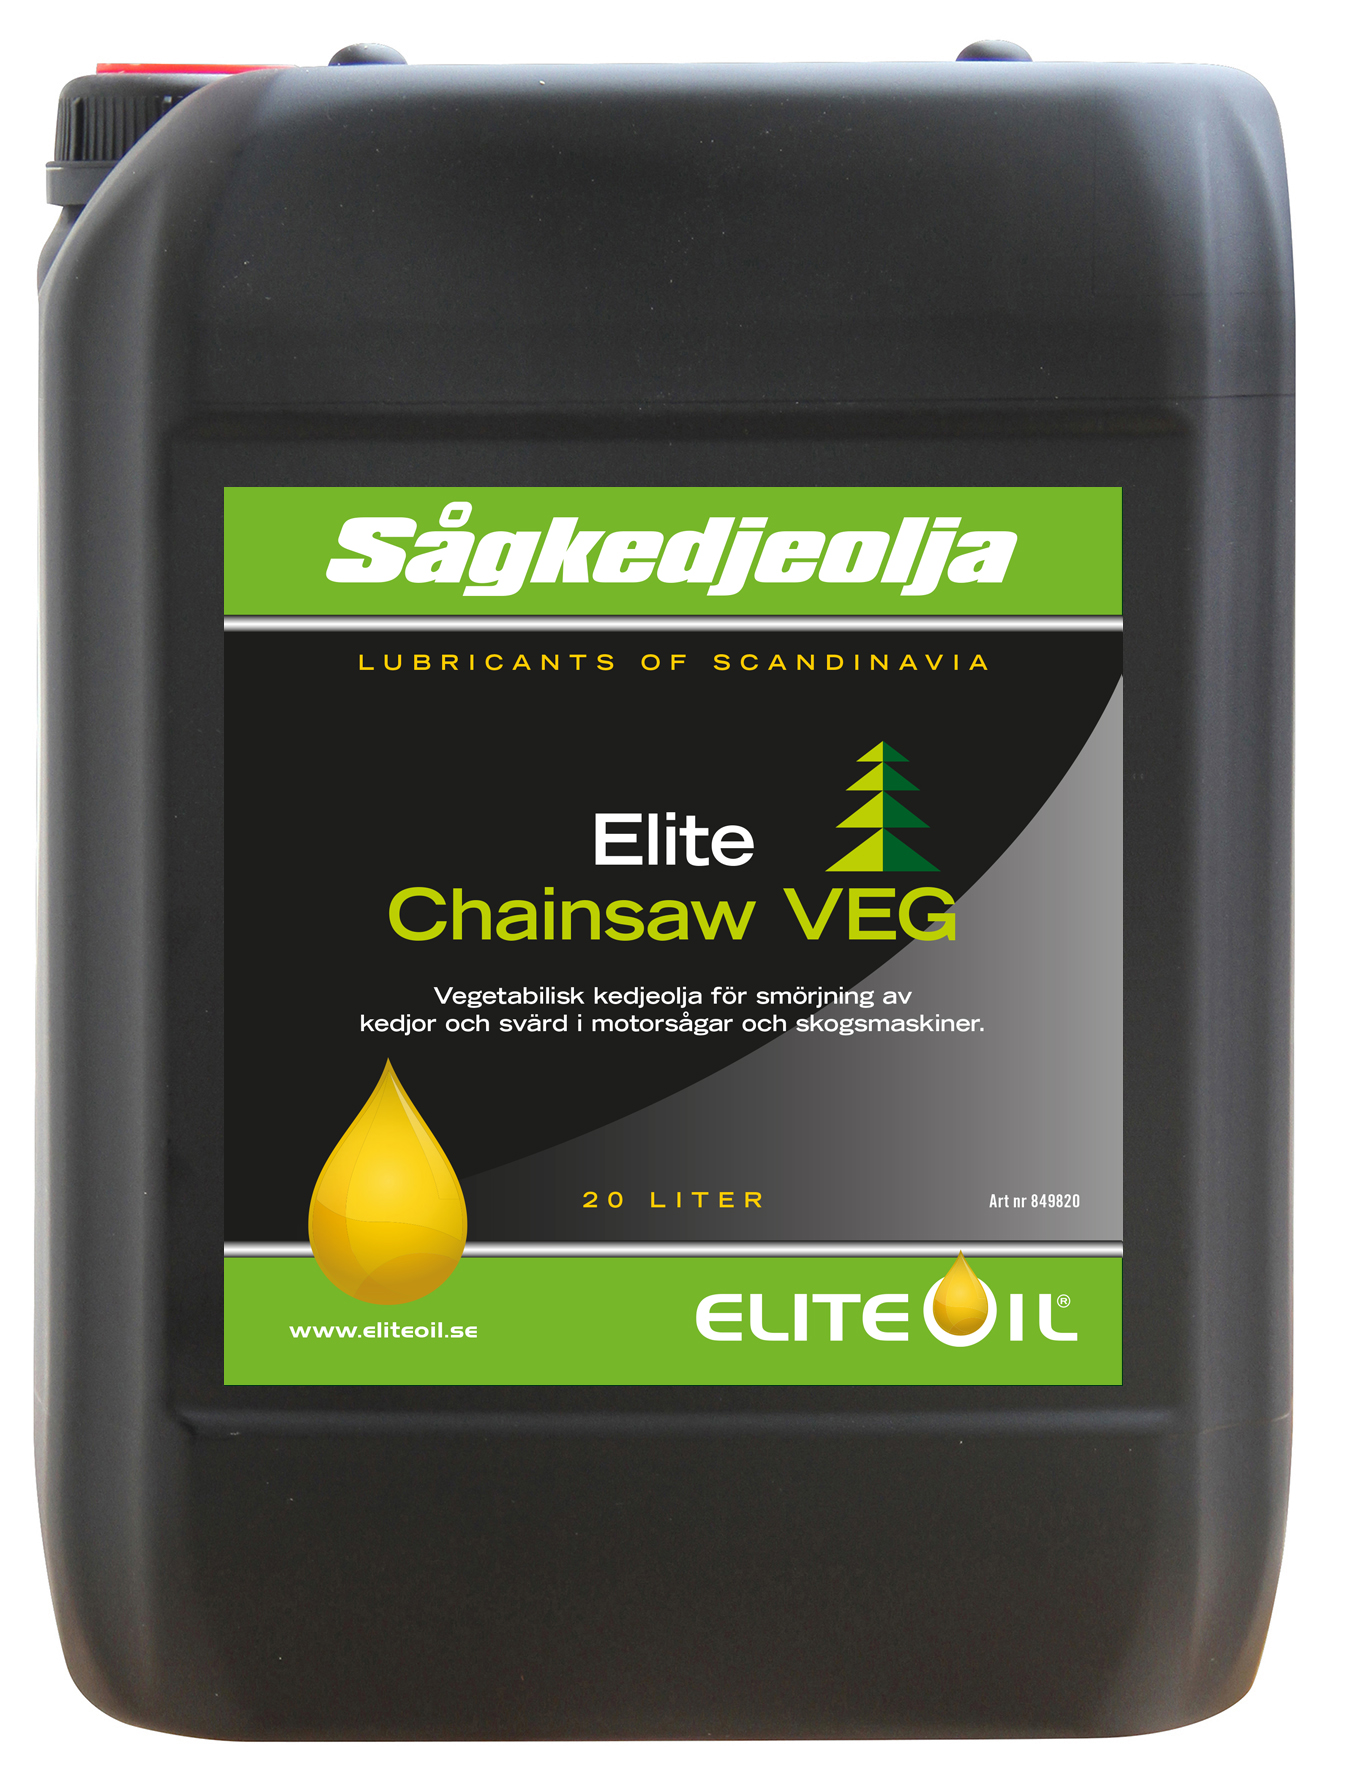 Elite Chain Saw VEG, 20 liter dunk-image